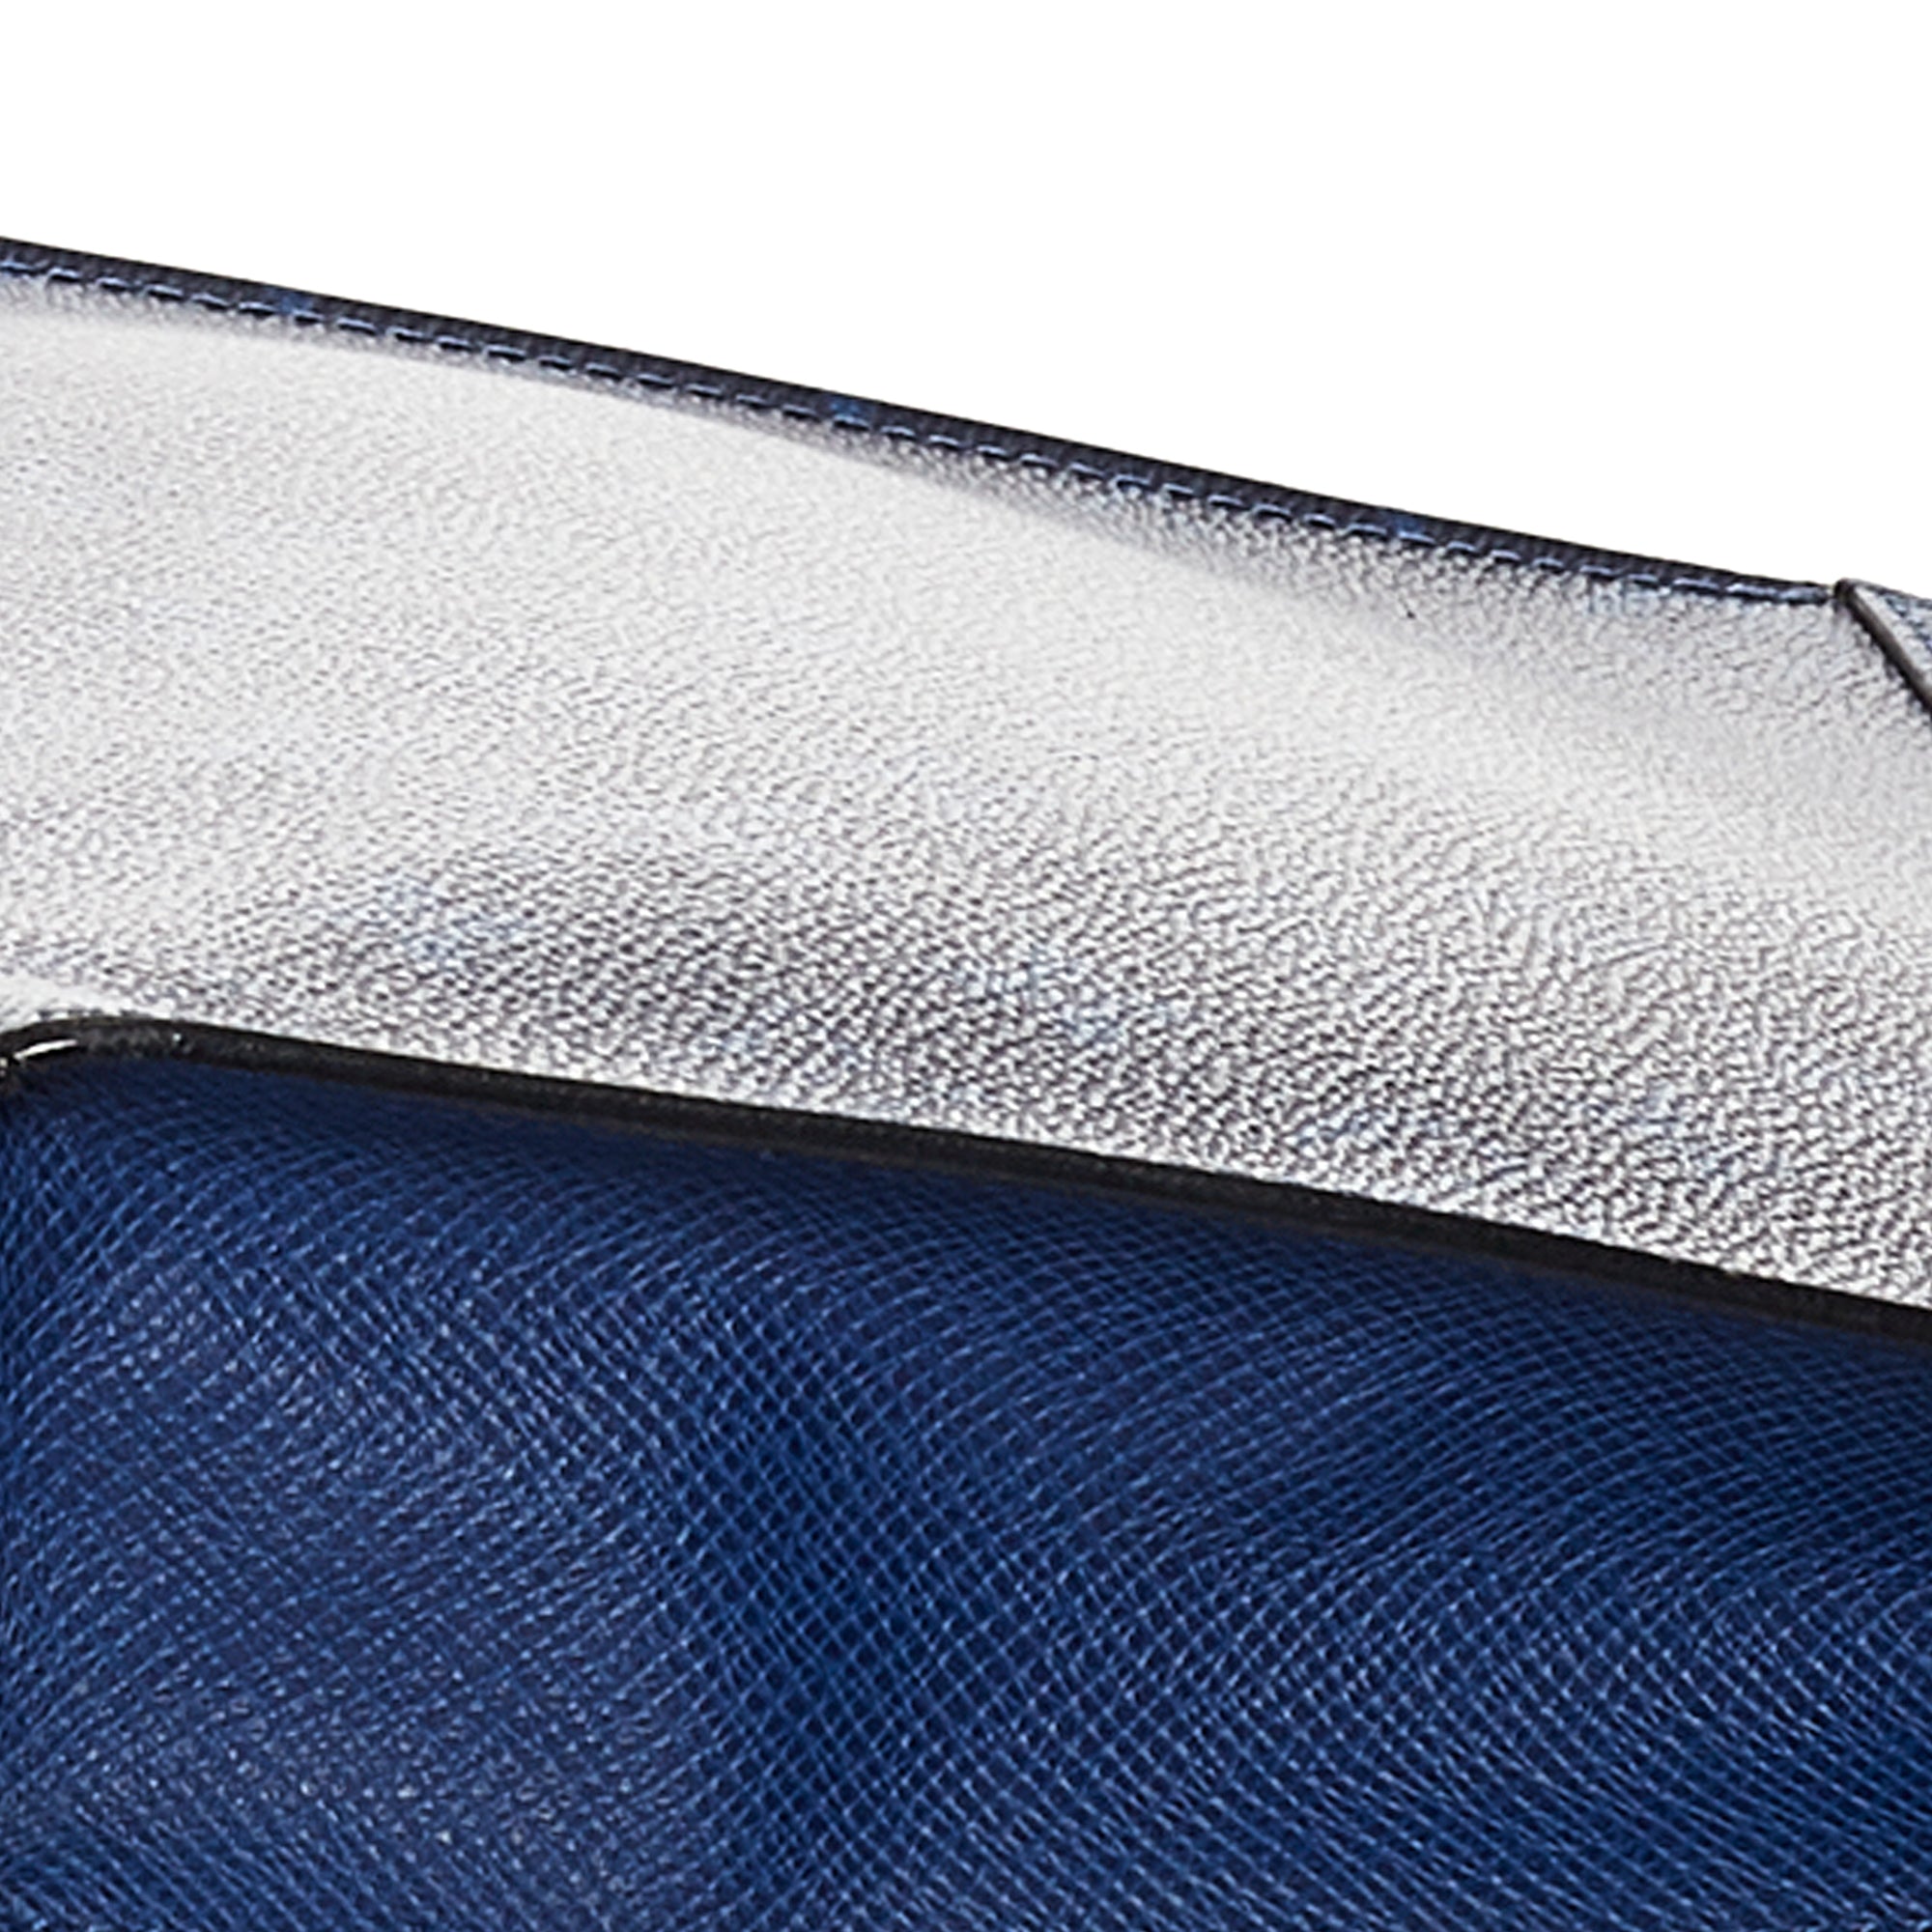 Blue Louis Vuitton Monogram Taigarama Pochette Voyage MM Clutch Bag, Cra-wallonieShops Revival